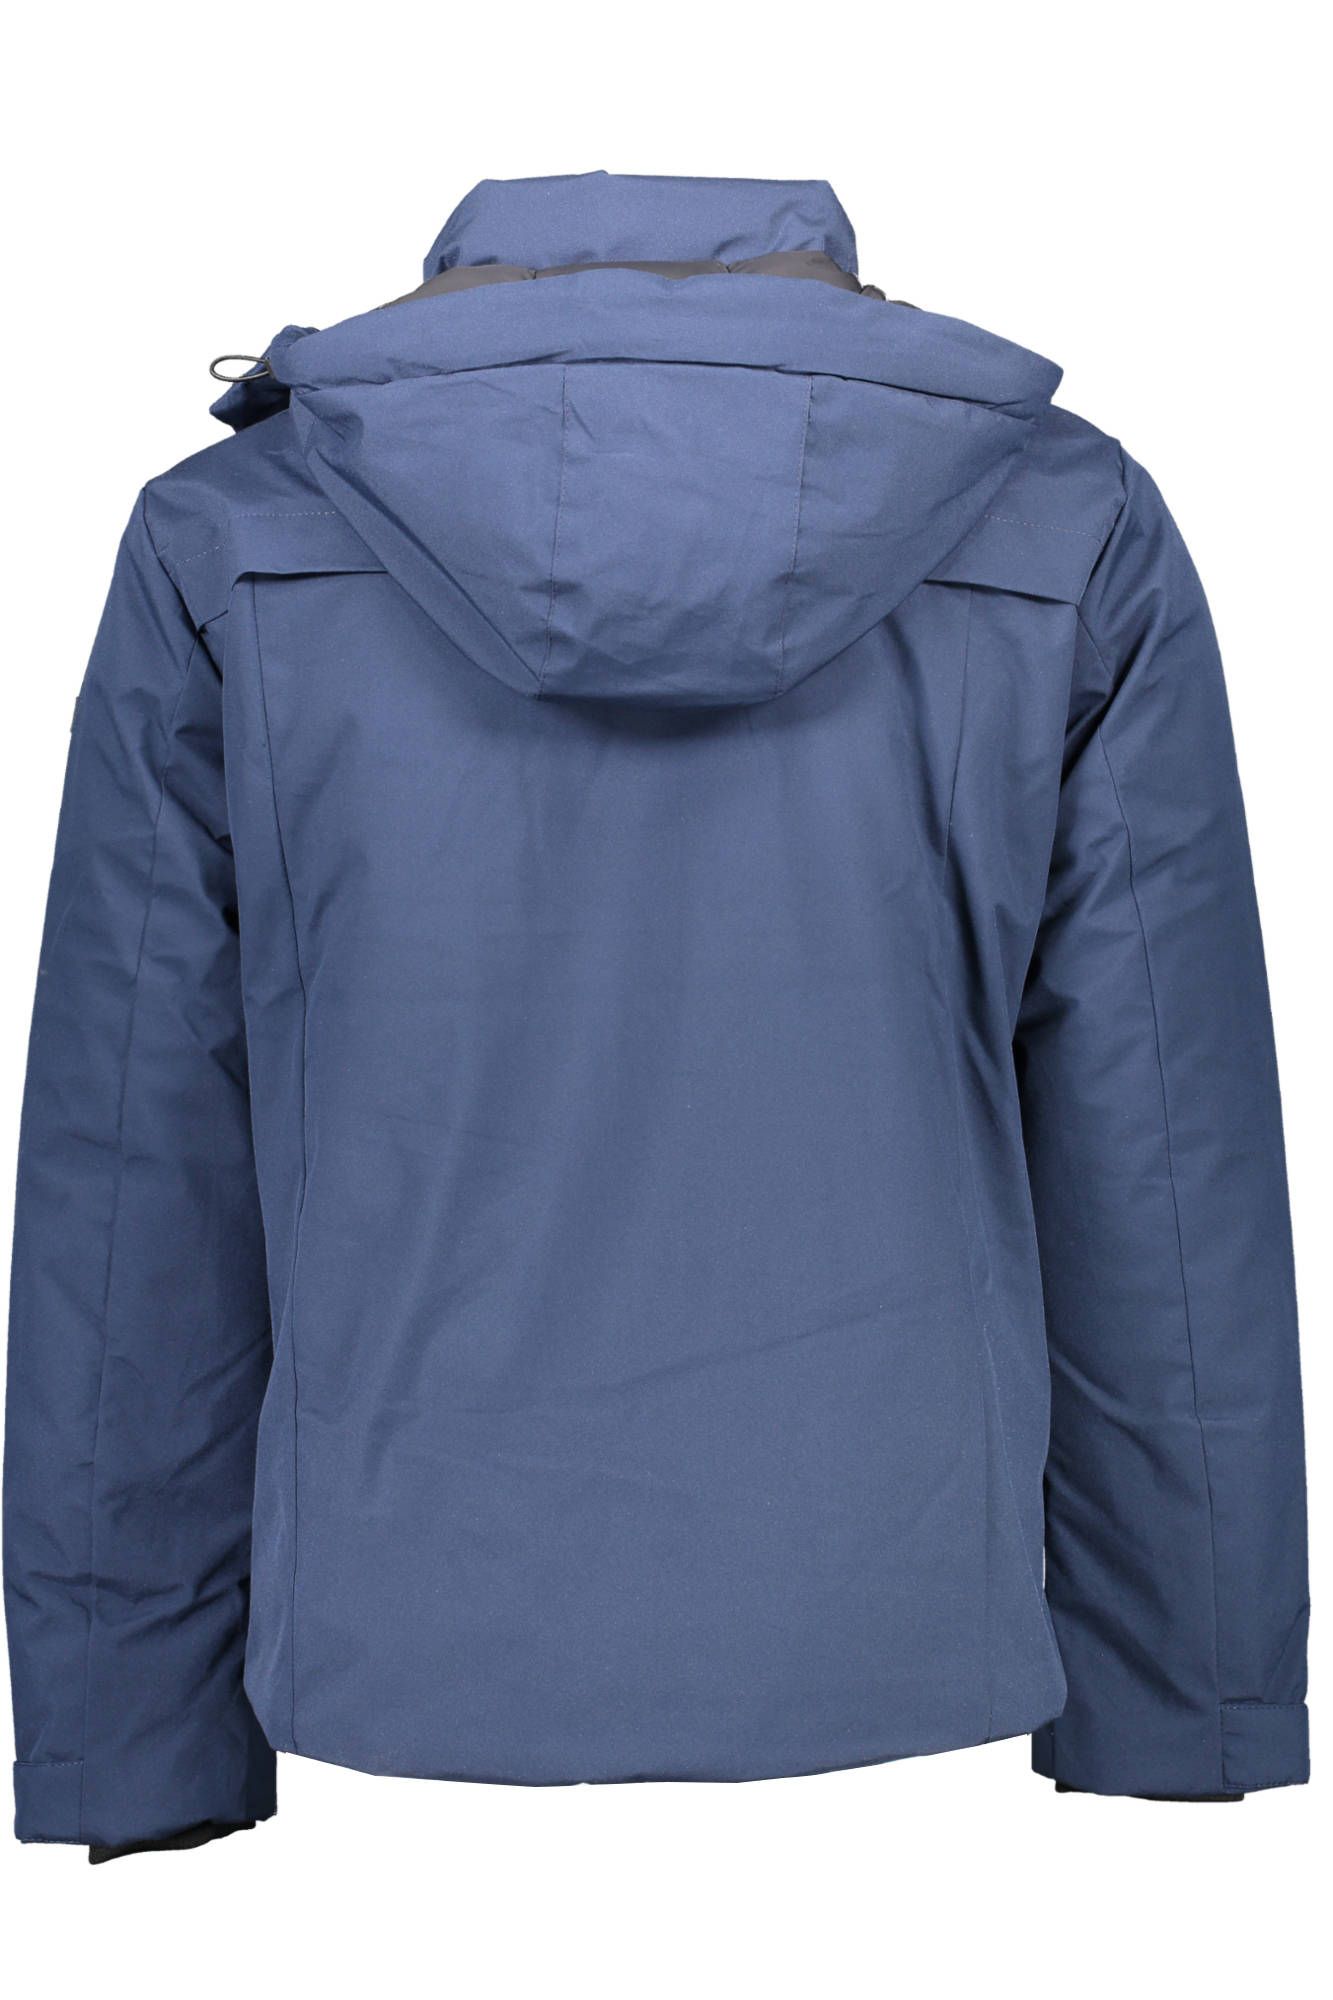 Waterproof Long-Sleeved Hooded Jacket with Multiple Pockets